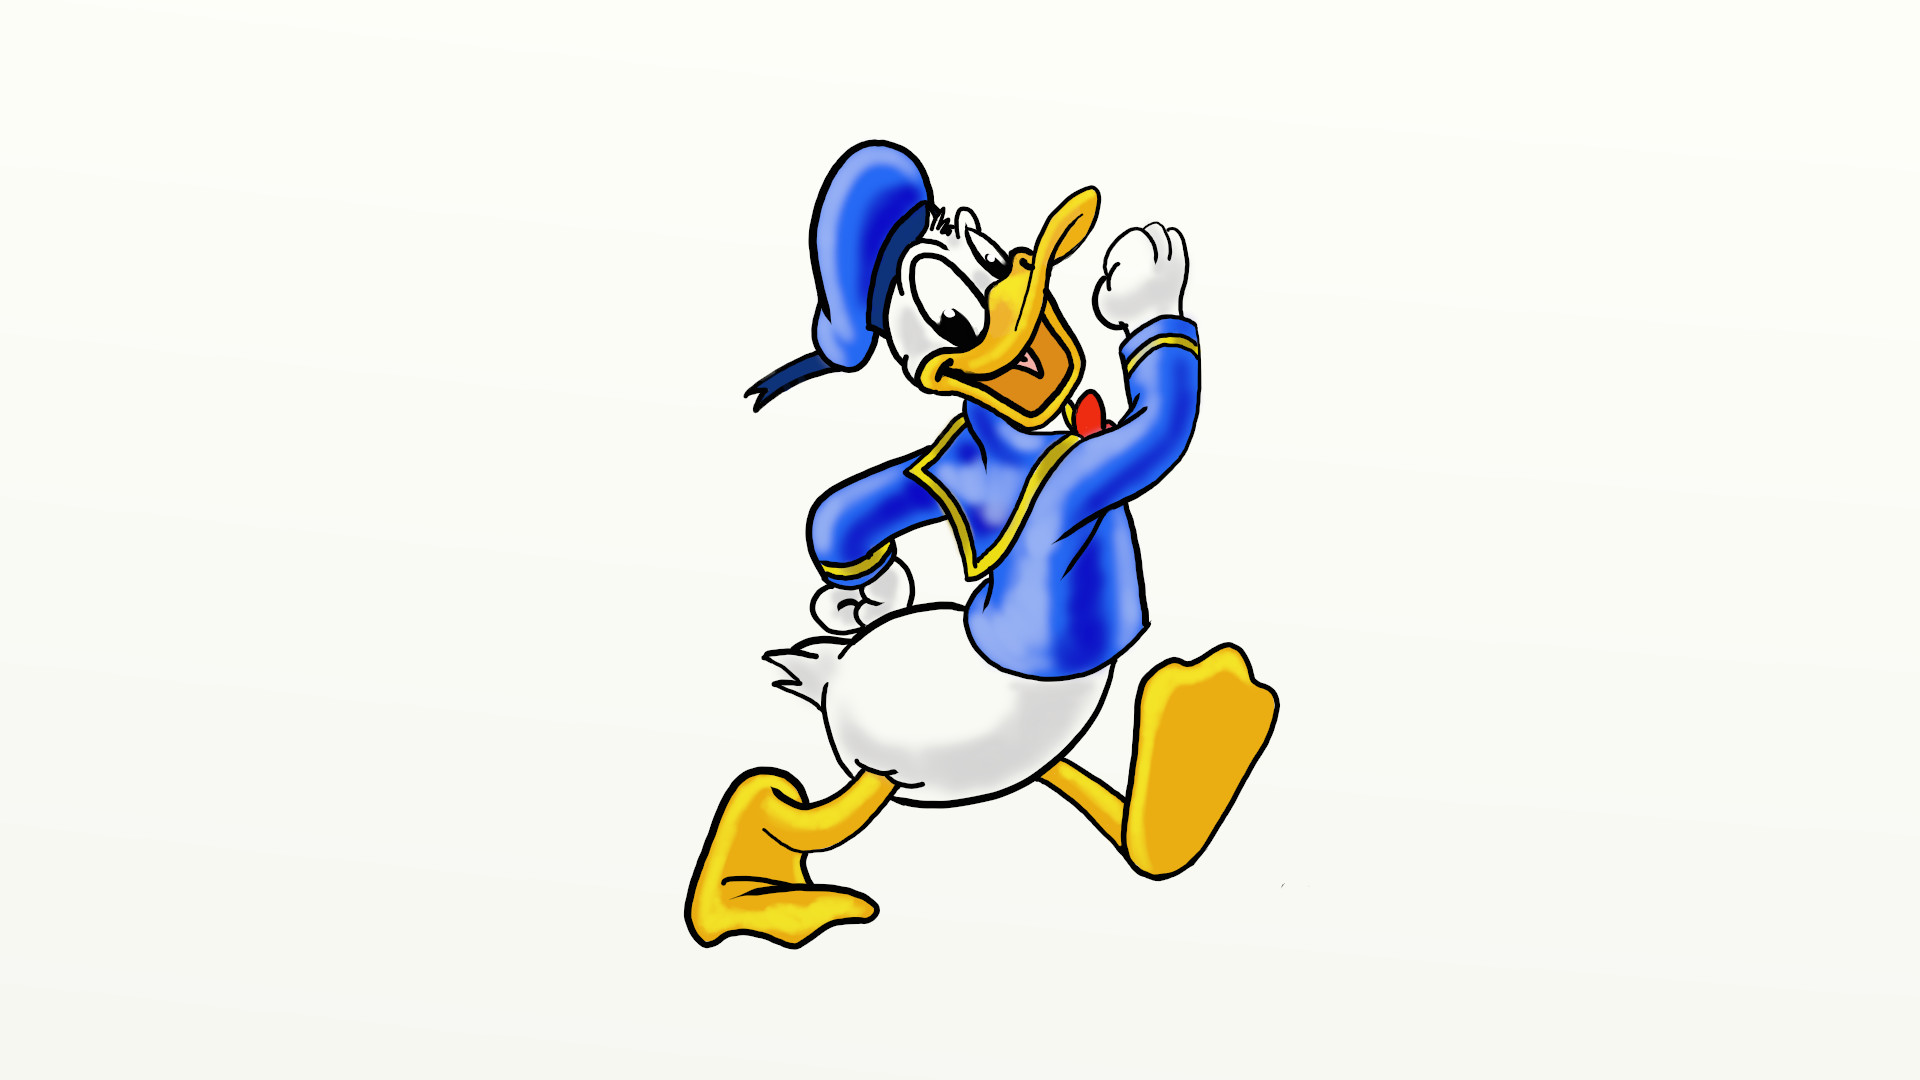 Daily Cartoon Drawings - Drawing Donald Duck